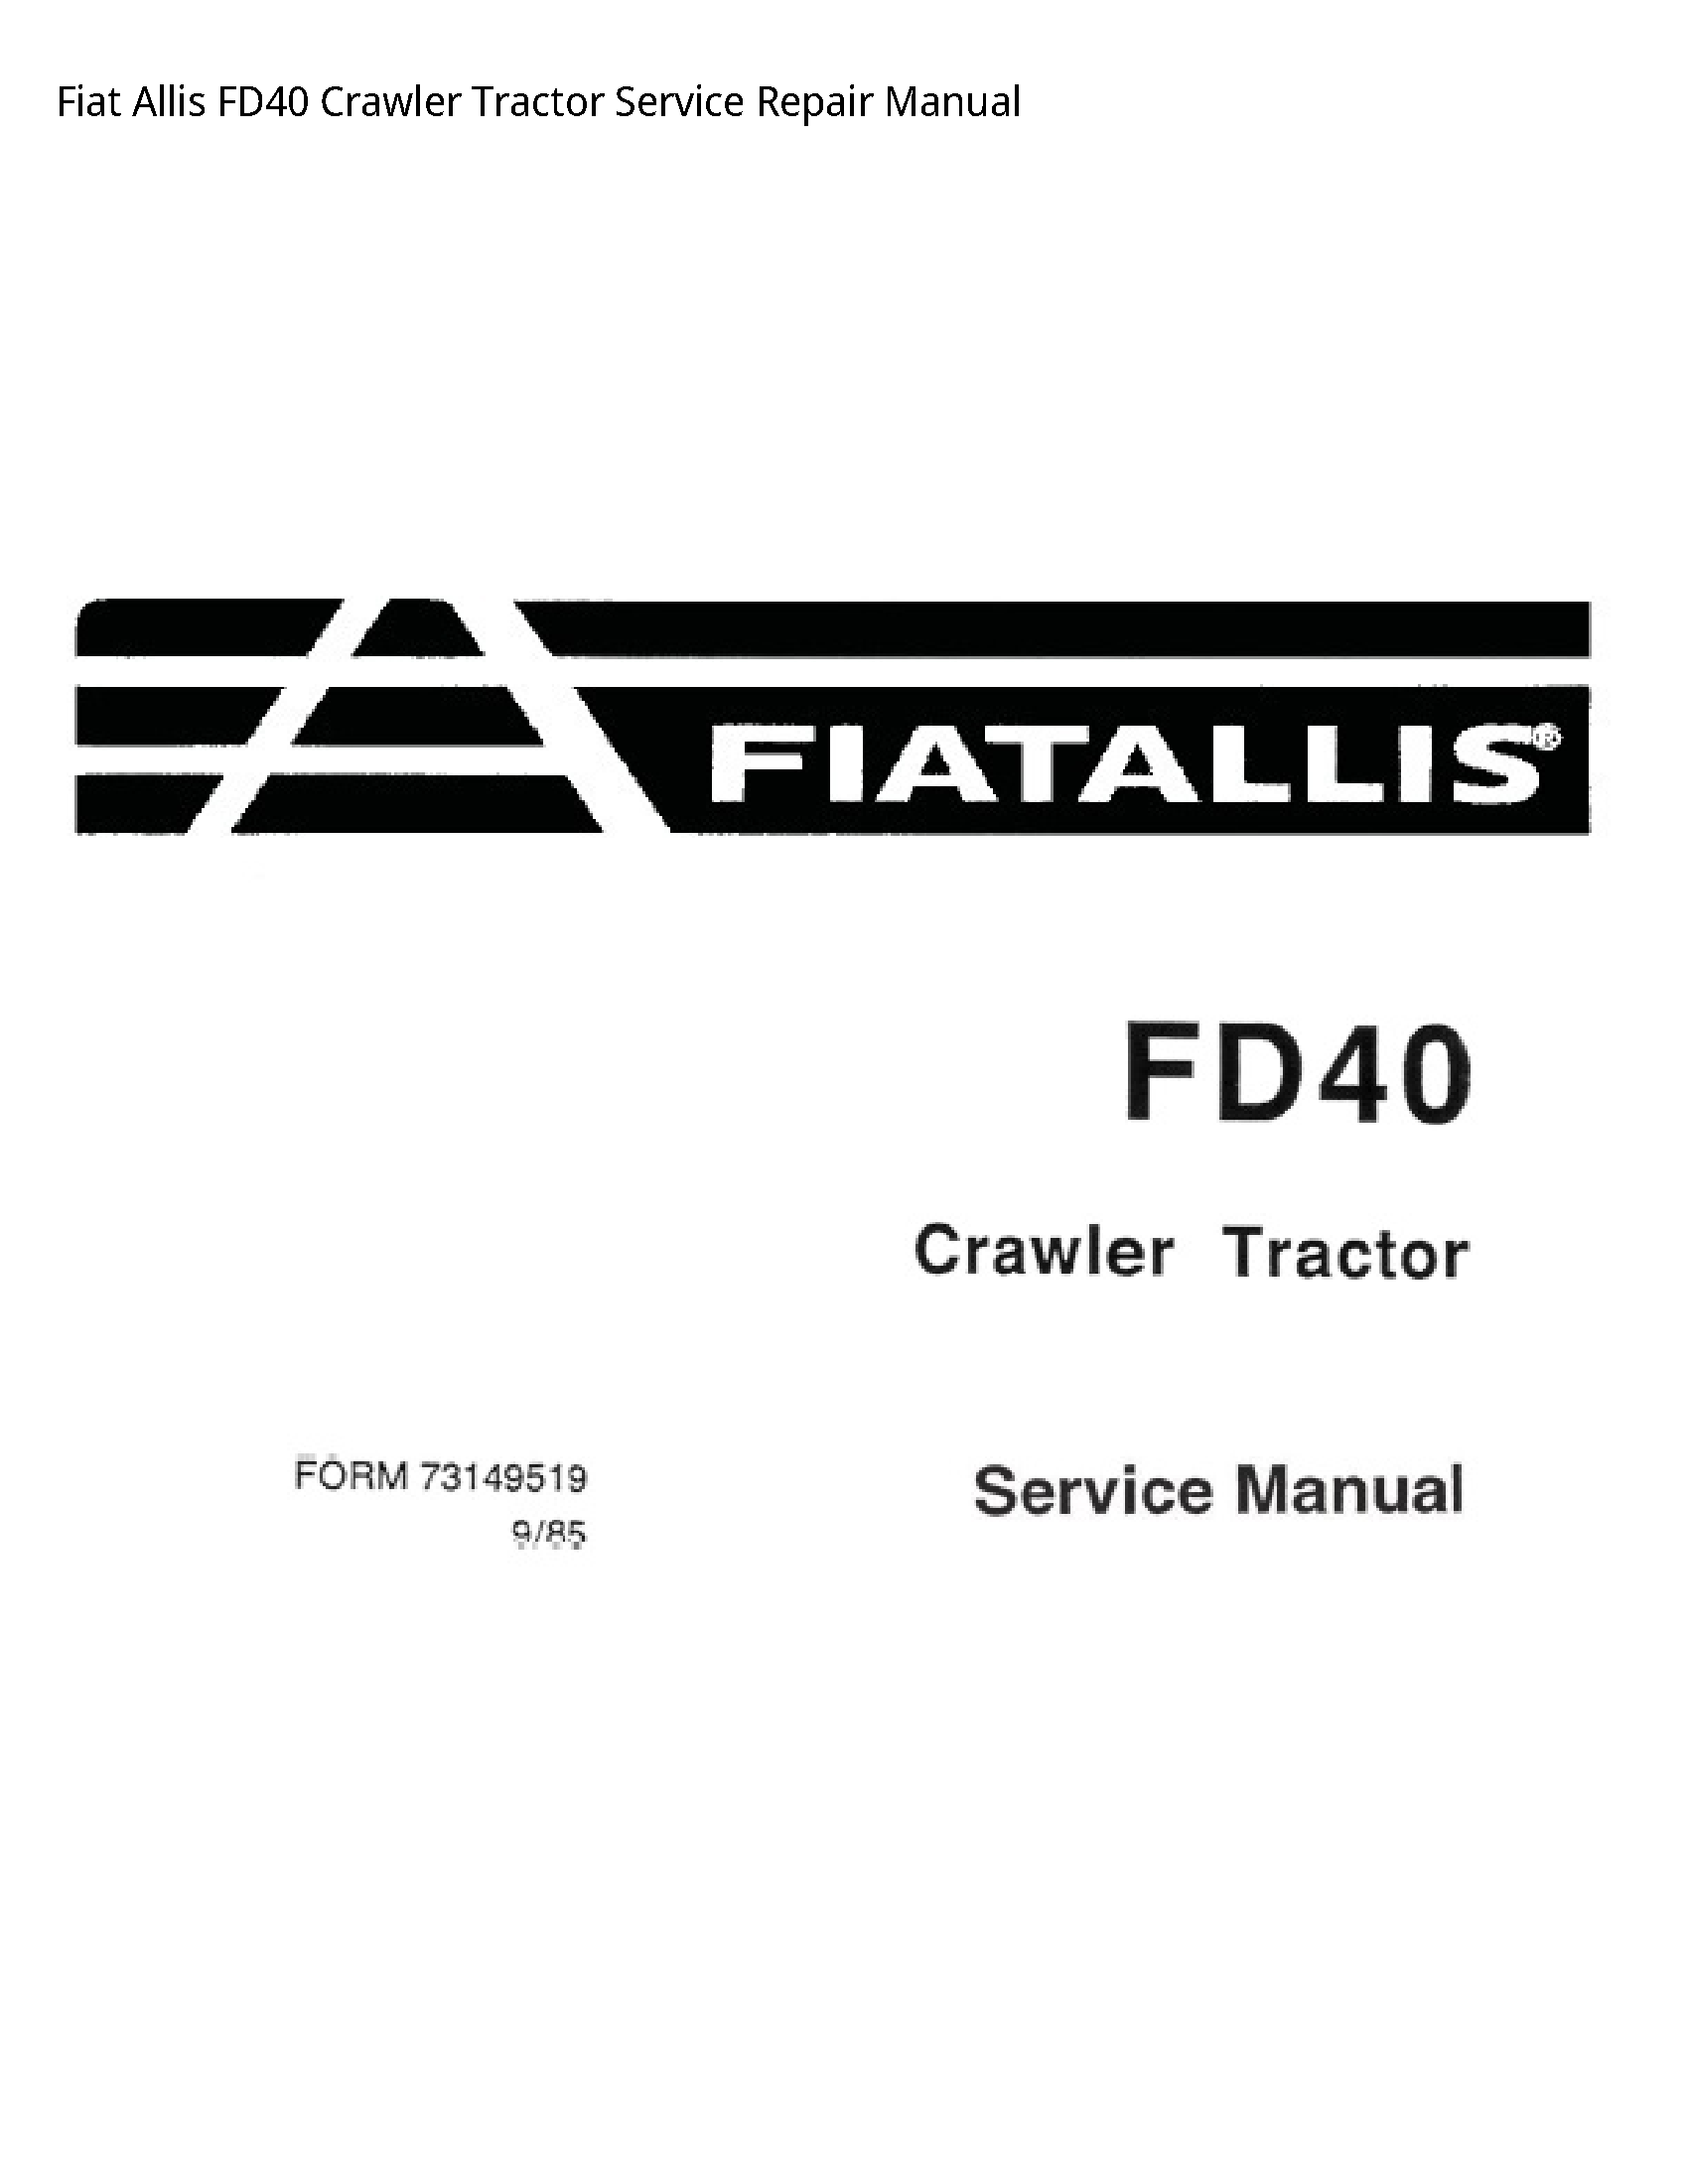 Fiat Allis FD40 Crawler Tractor manual